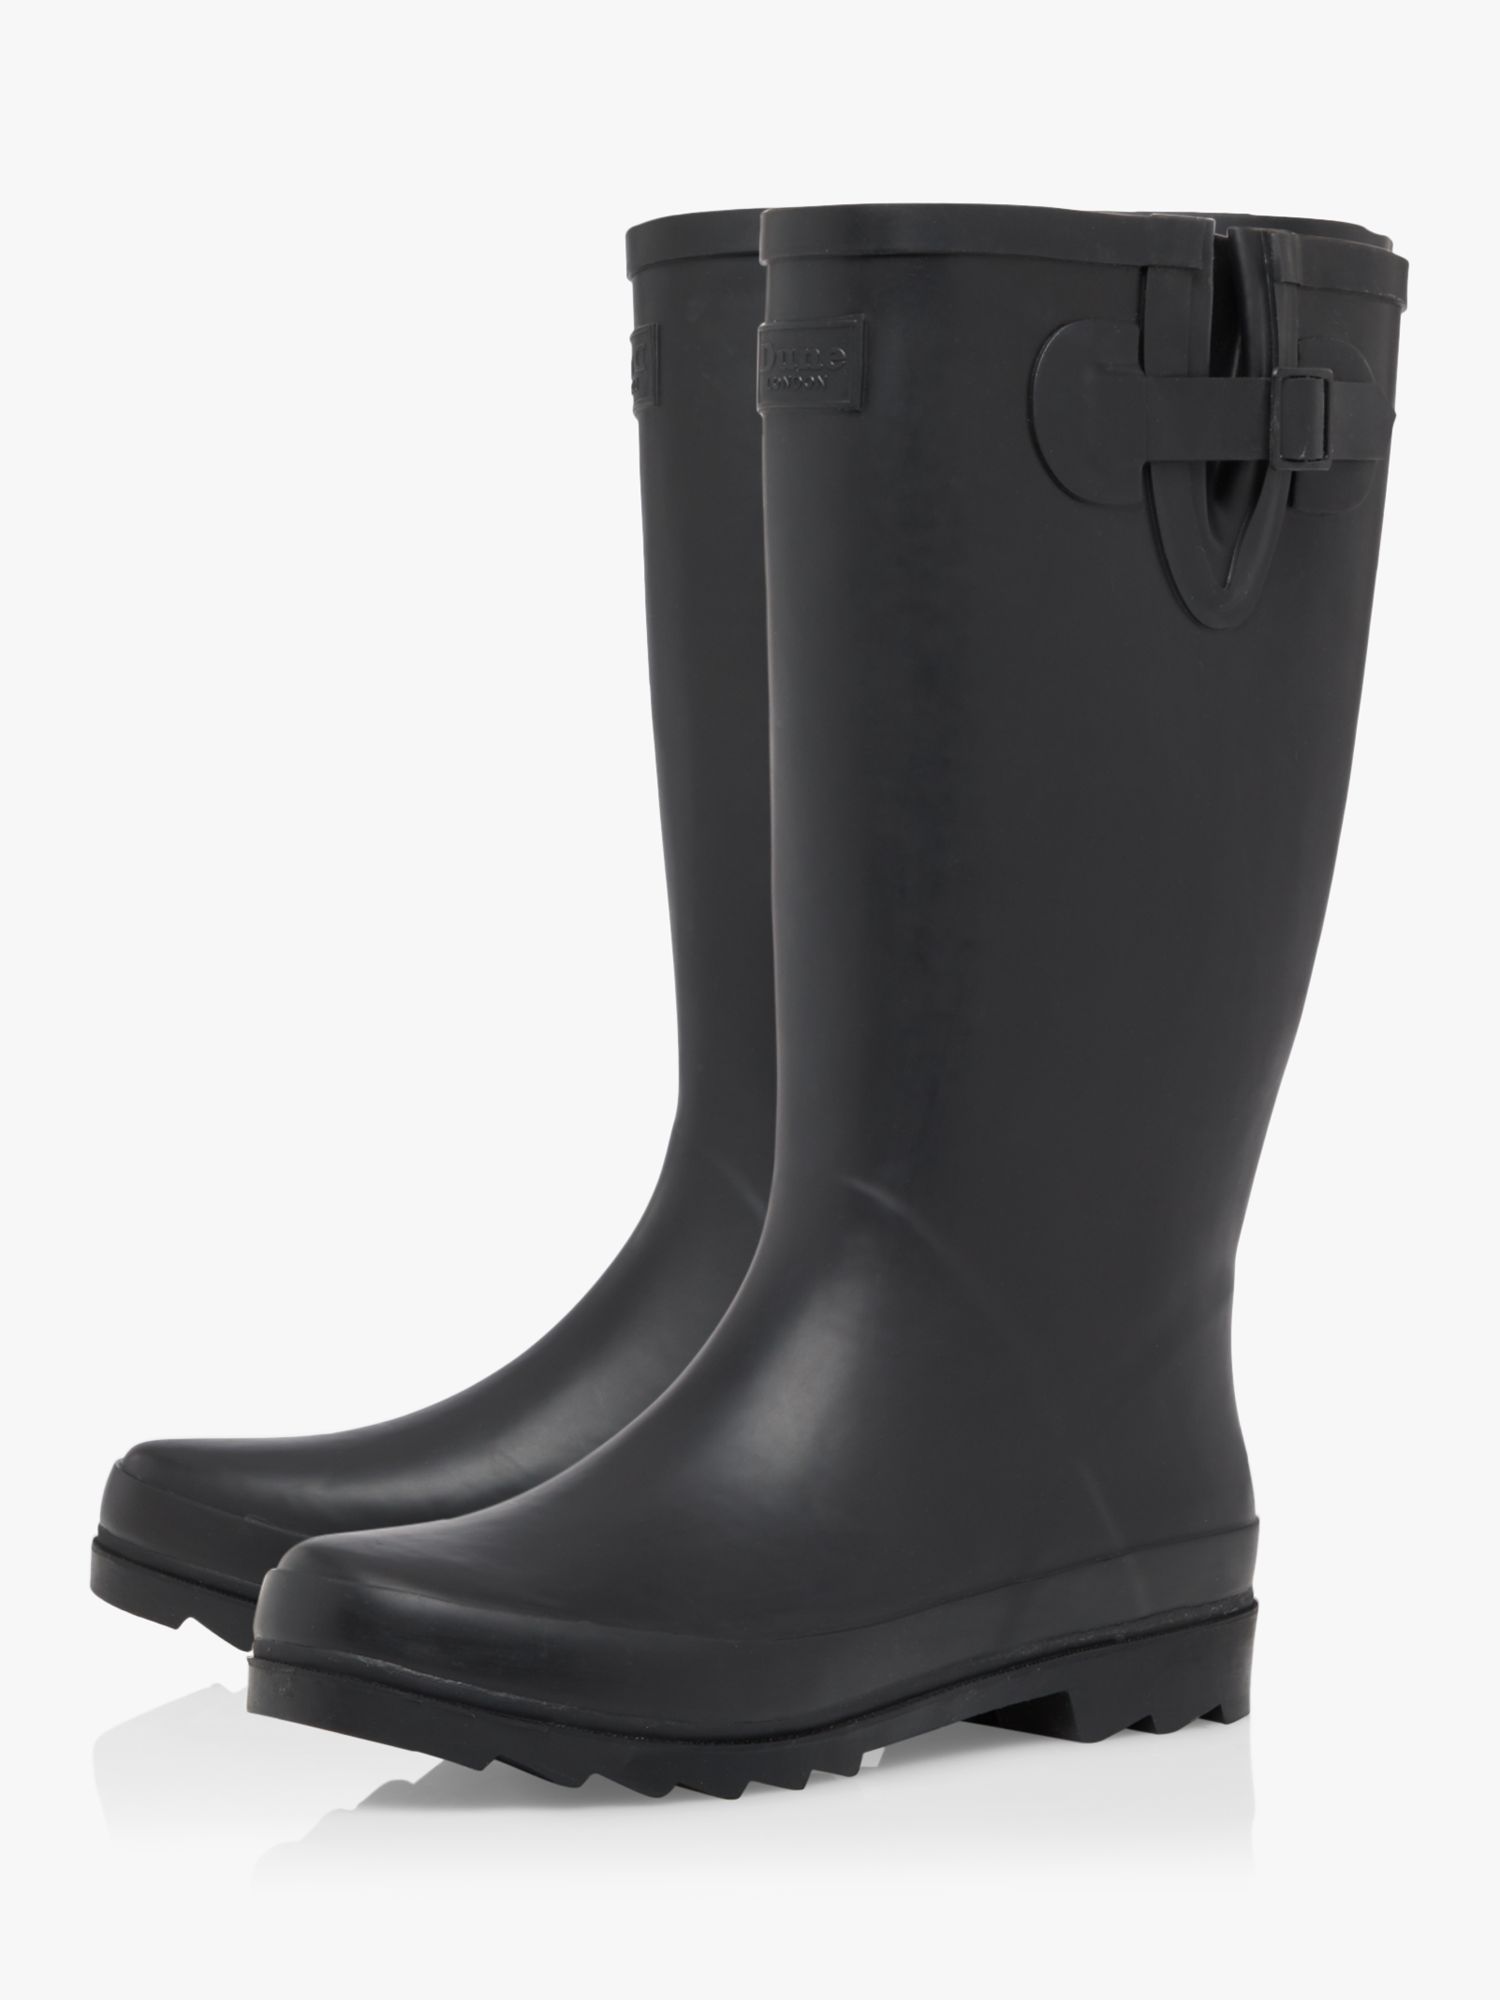 Dune Reid Waterproof Wellington Boots, Black at John Lewis & Partners